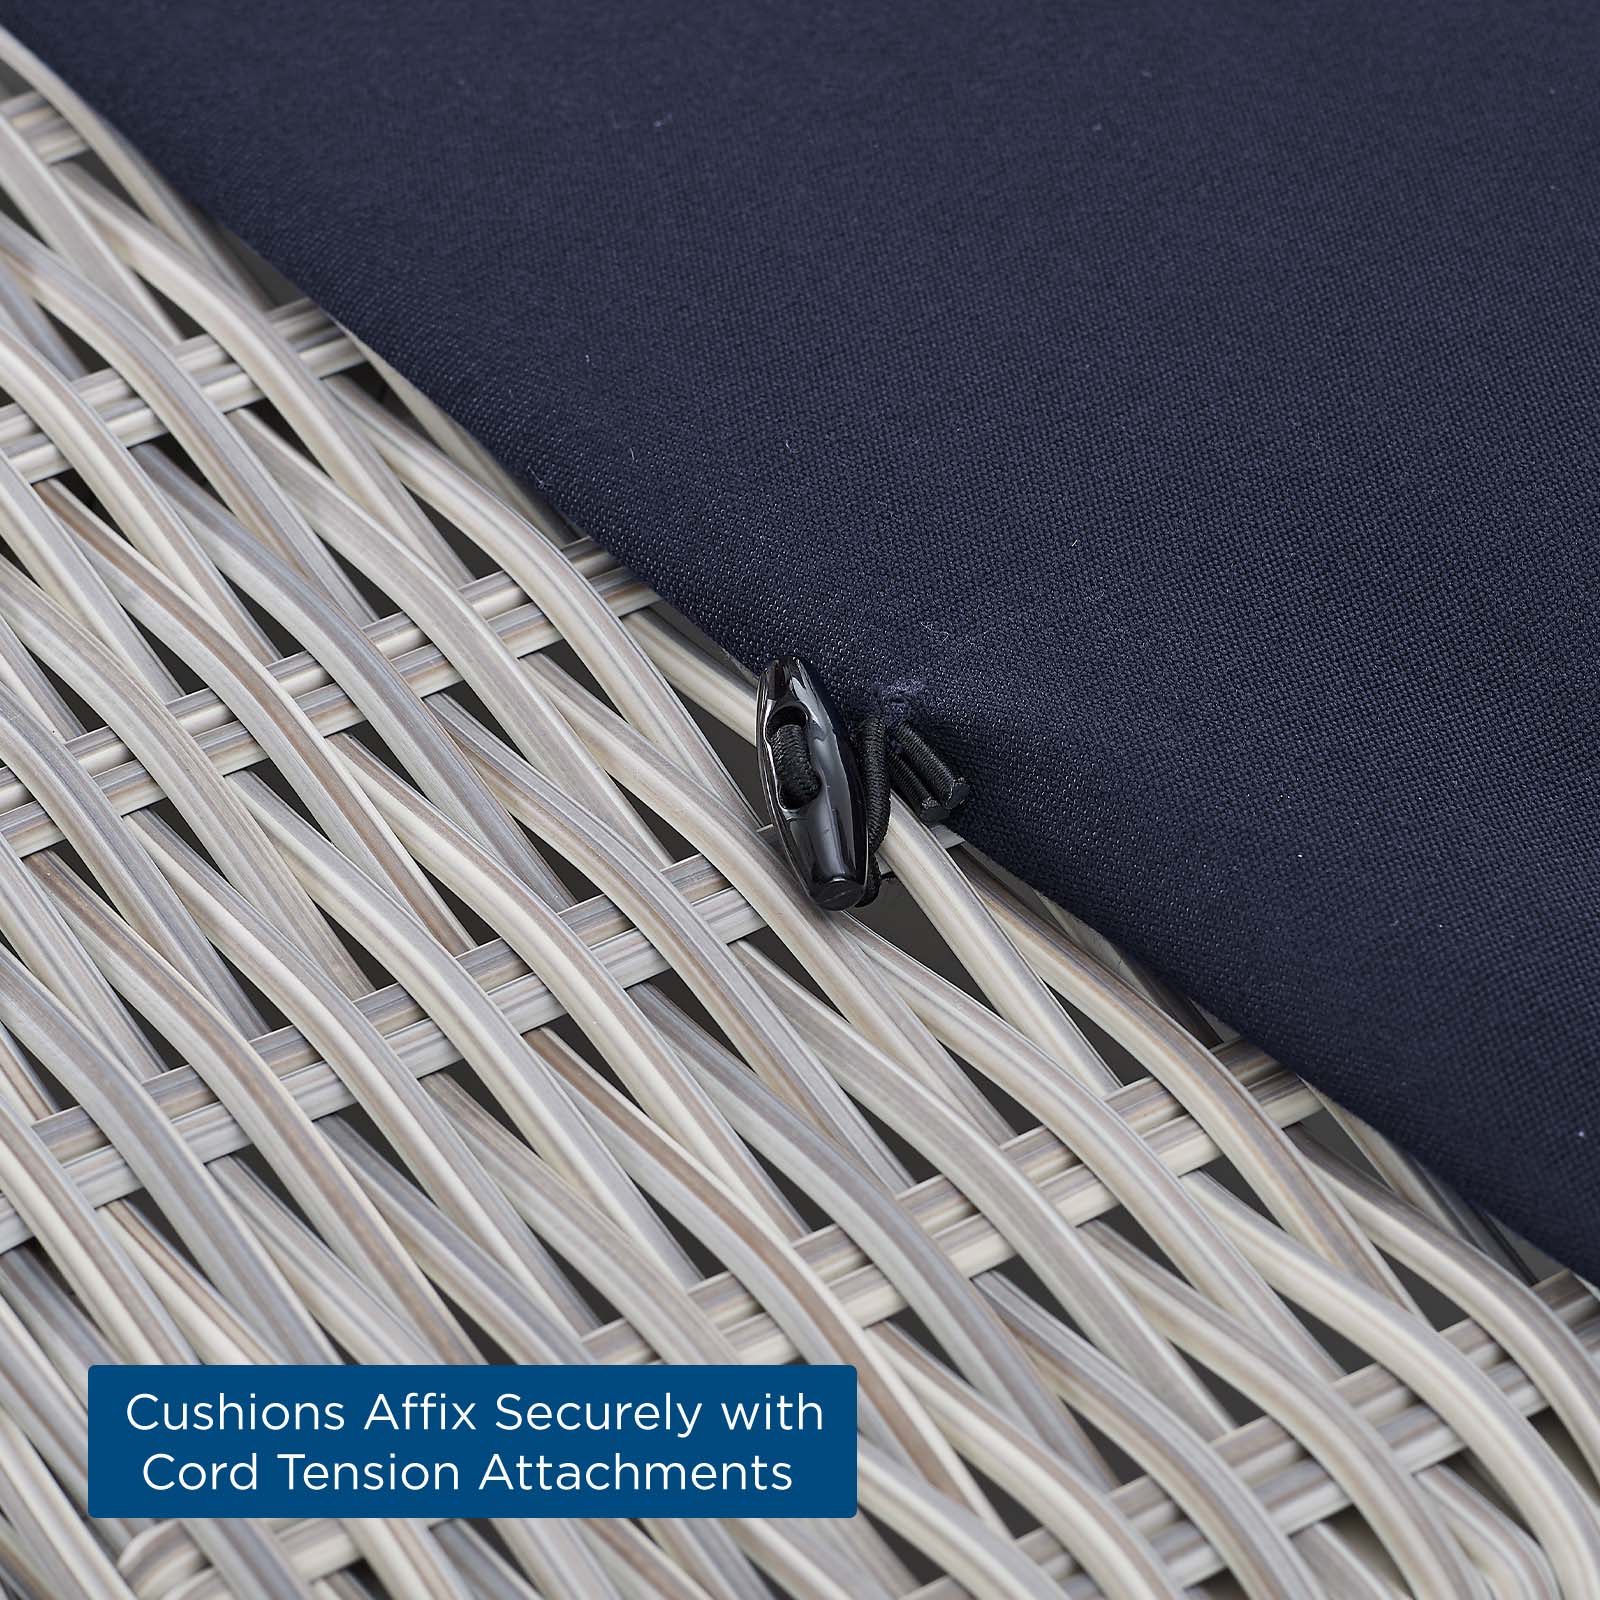 Conway Sunbrella® Outdoor Patio Wicker Rattan Armless Chair - East Shore Modern Home Furnishings